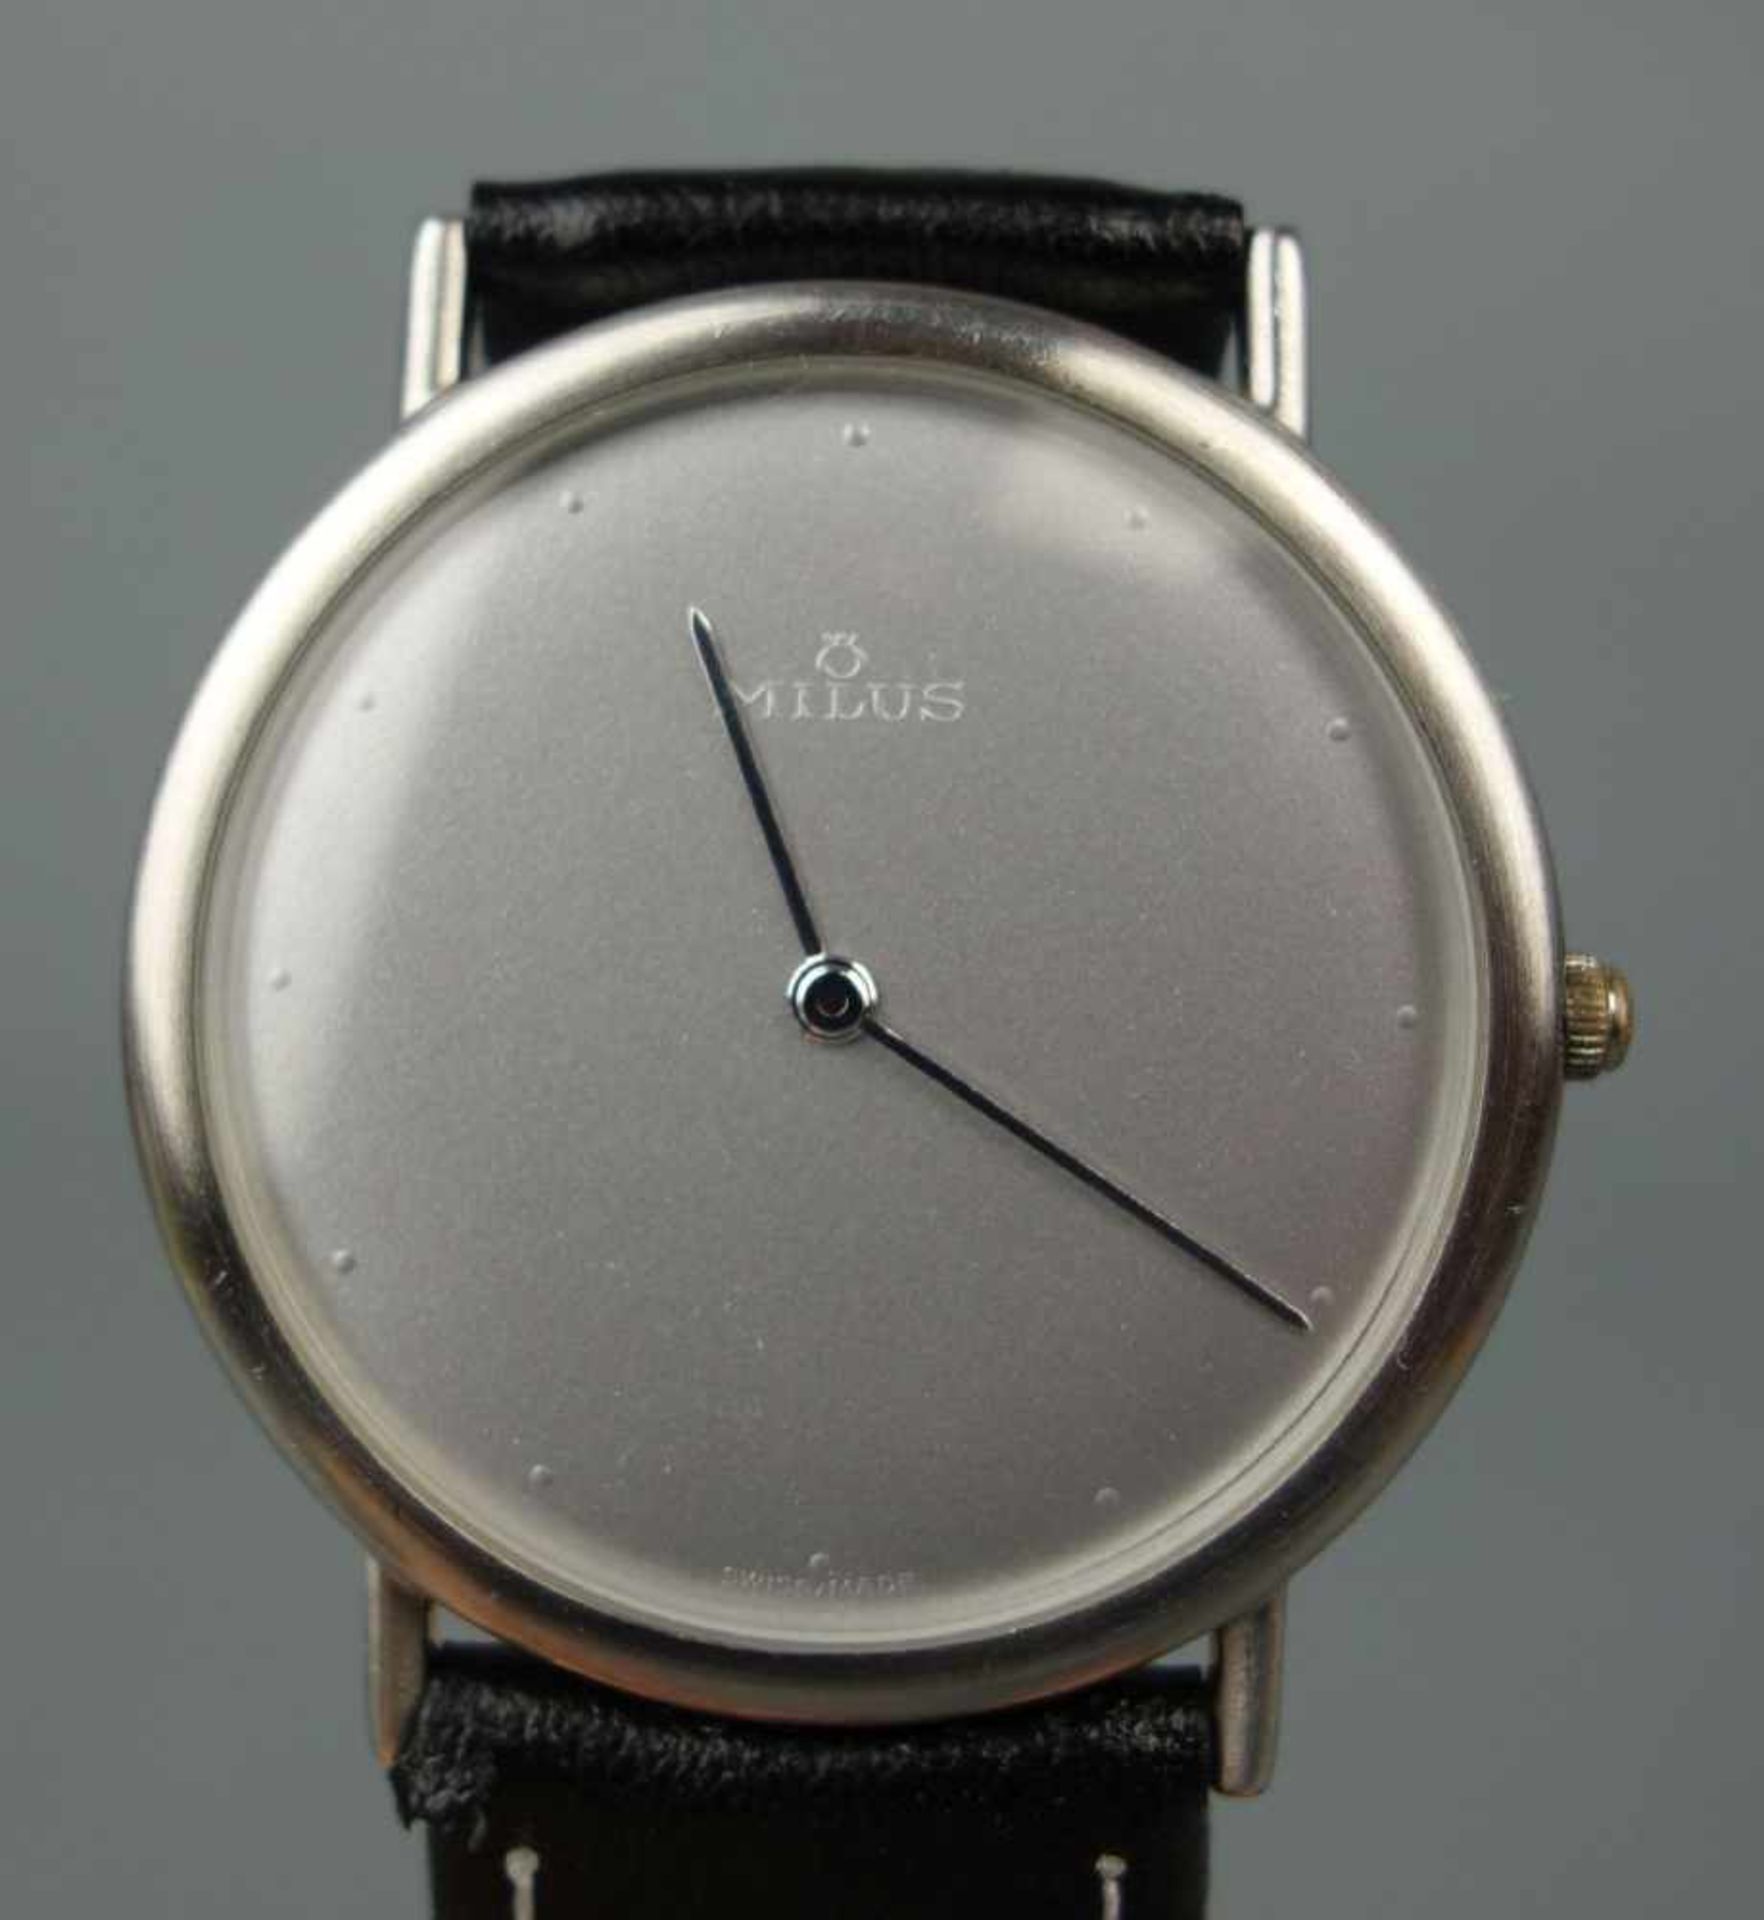 ARMBANDUHR - MILUS / wristwatch, Quartz, Schweiz. Rundes Edelstahlgehäuse an Lederarmband. - Bild 2 aus 5